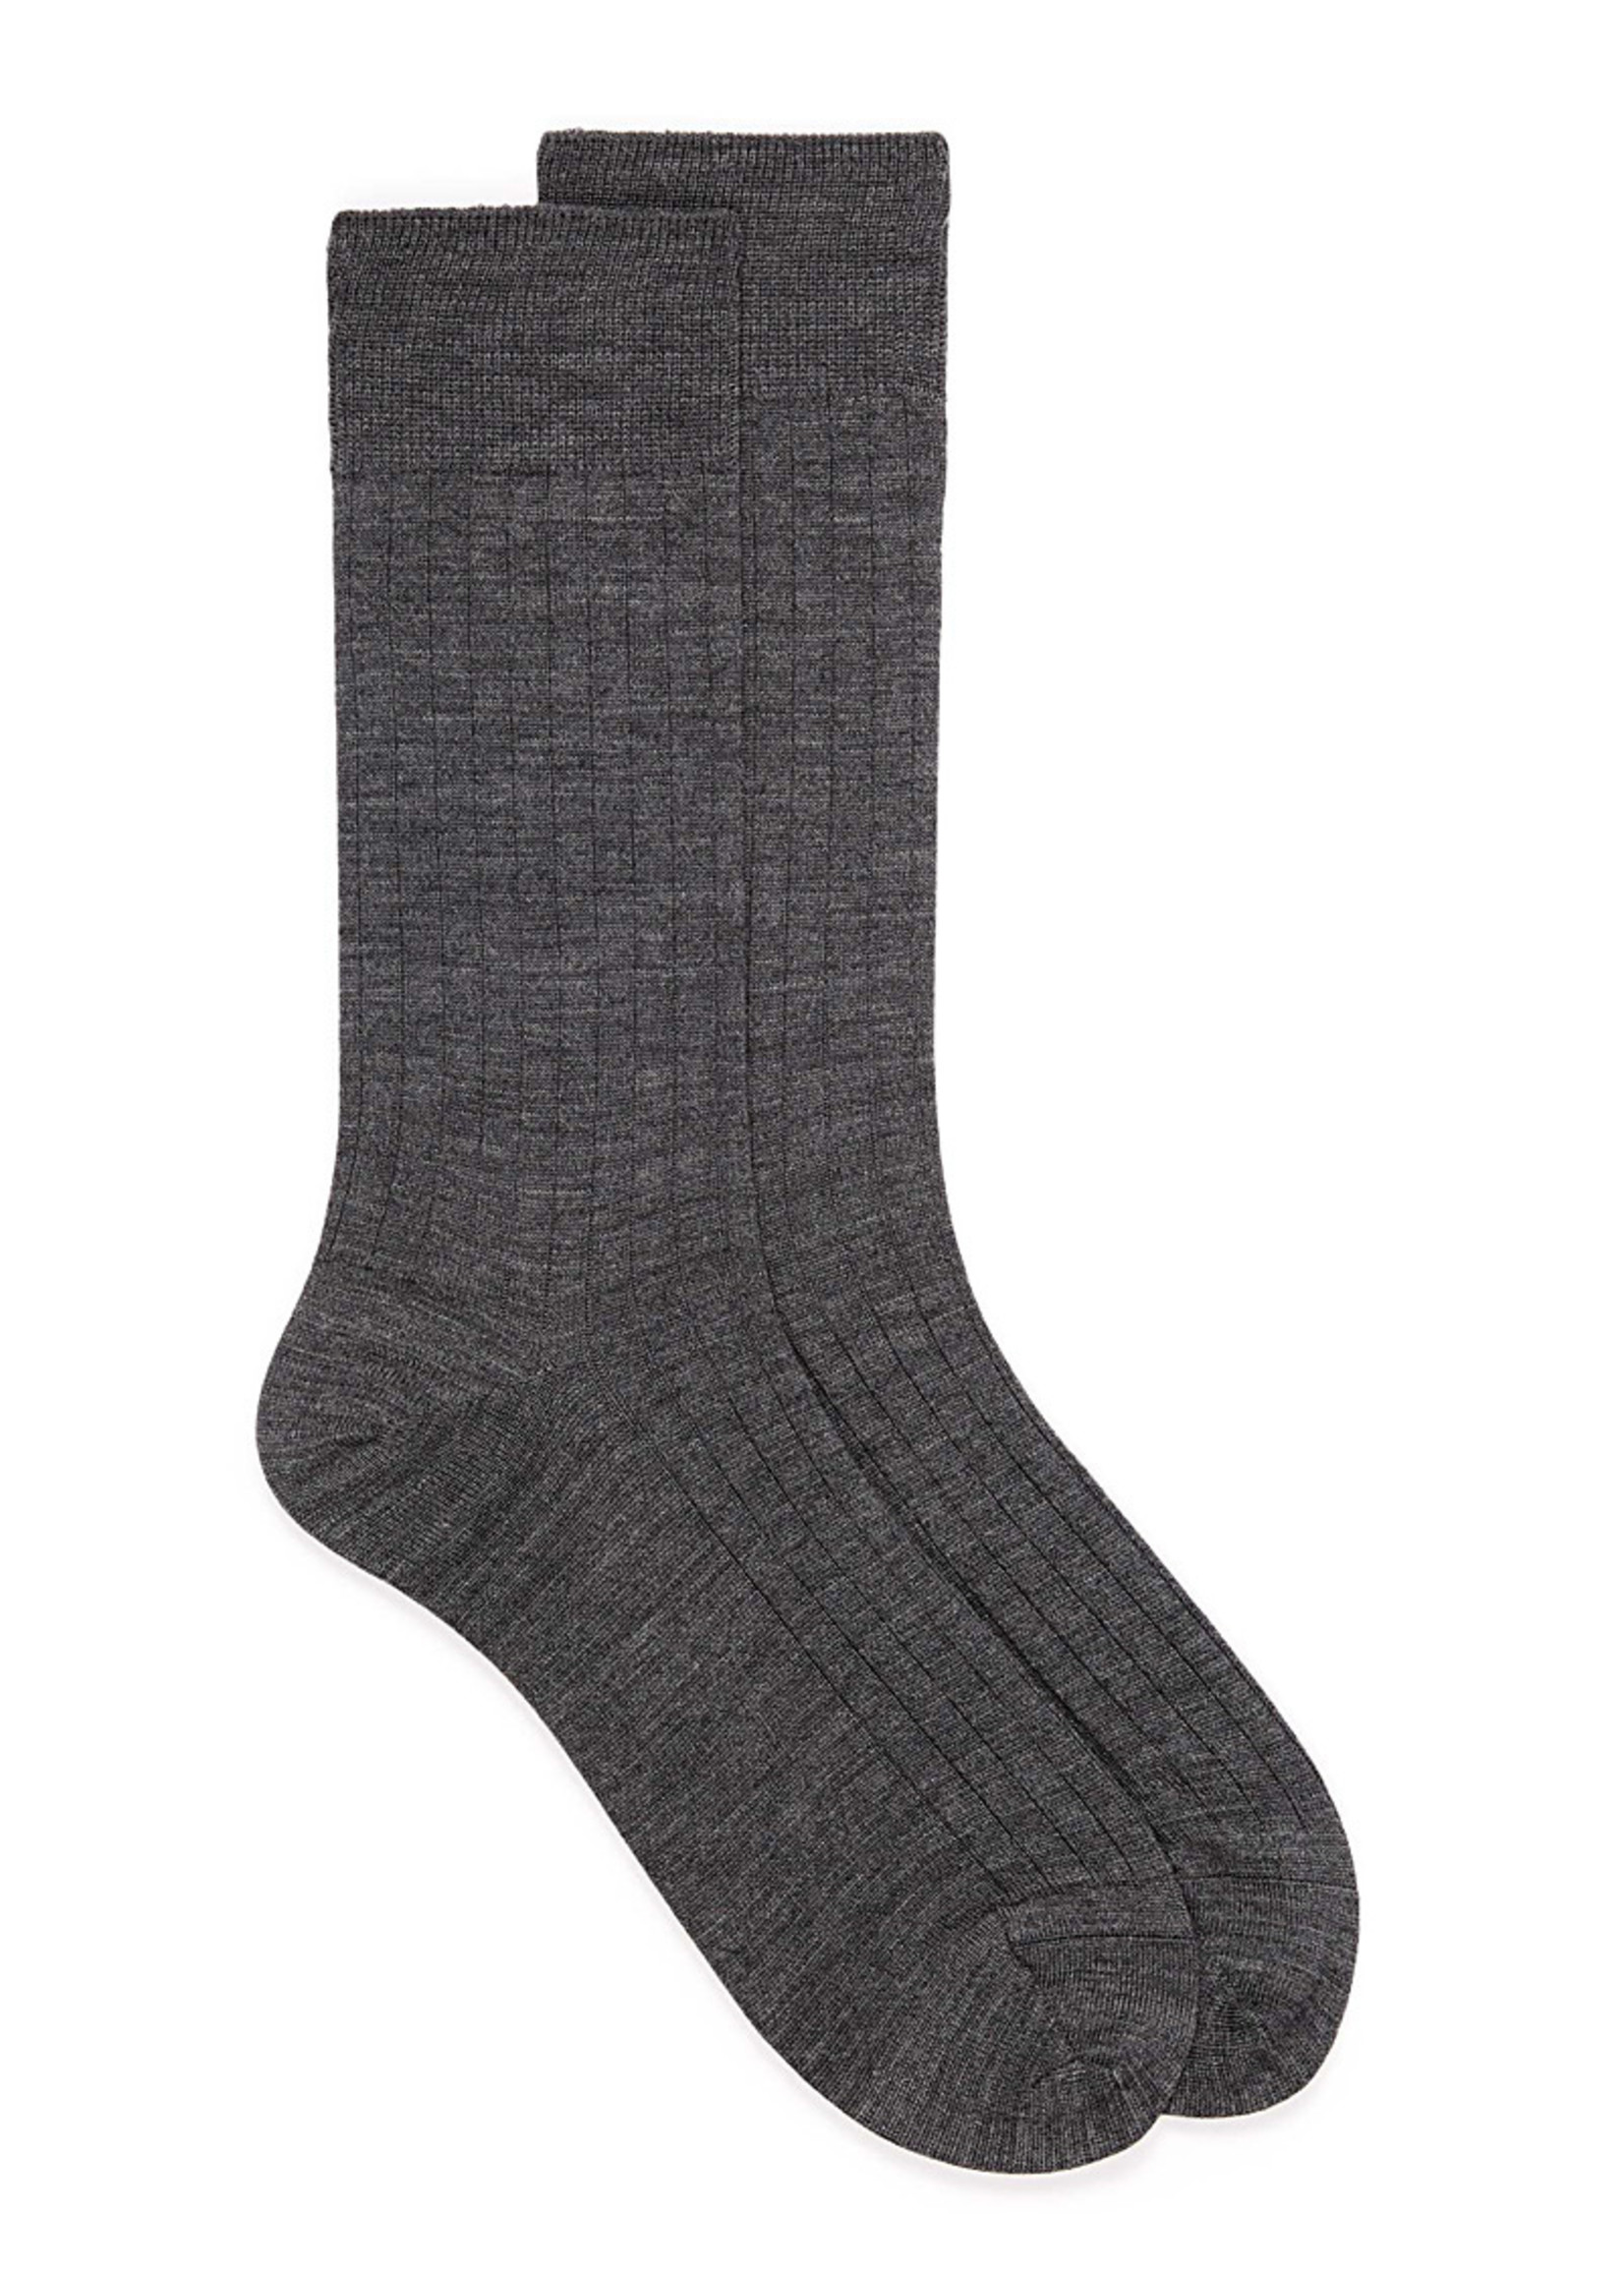 MCGREGOR Men's classic merino wool dress socks